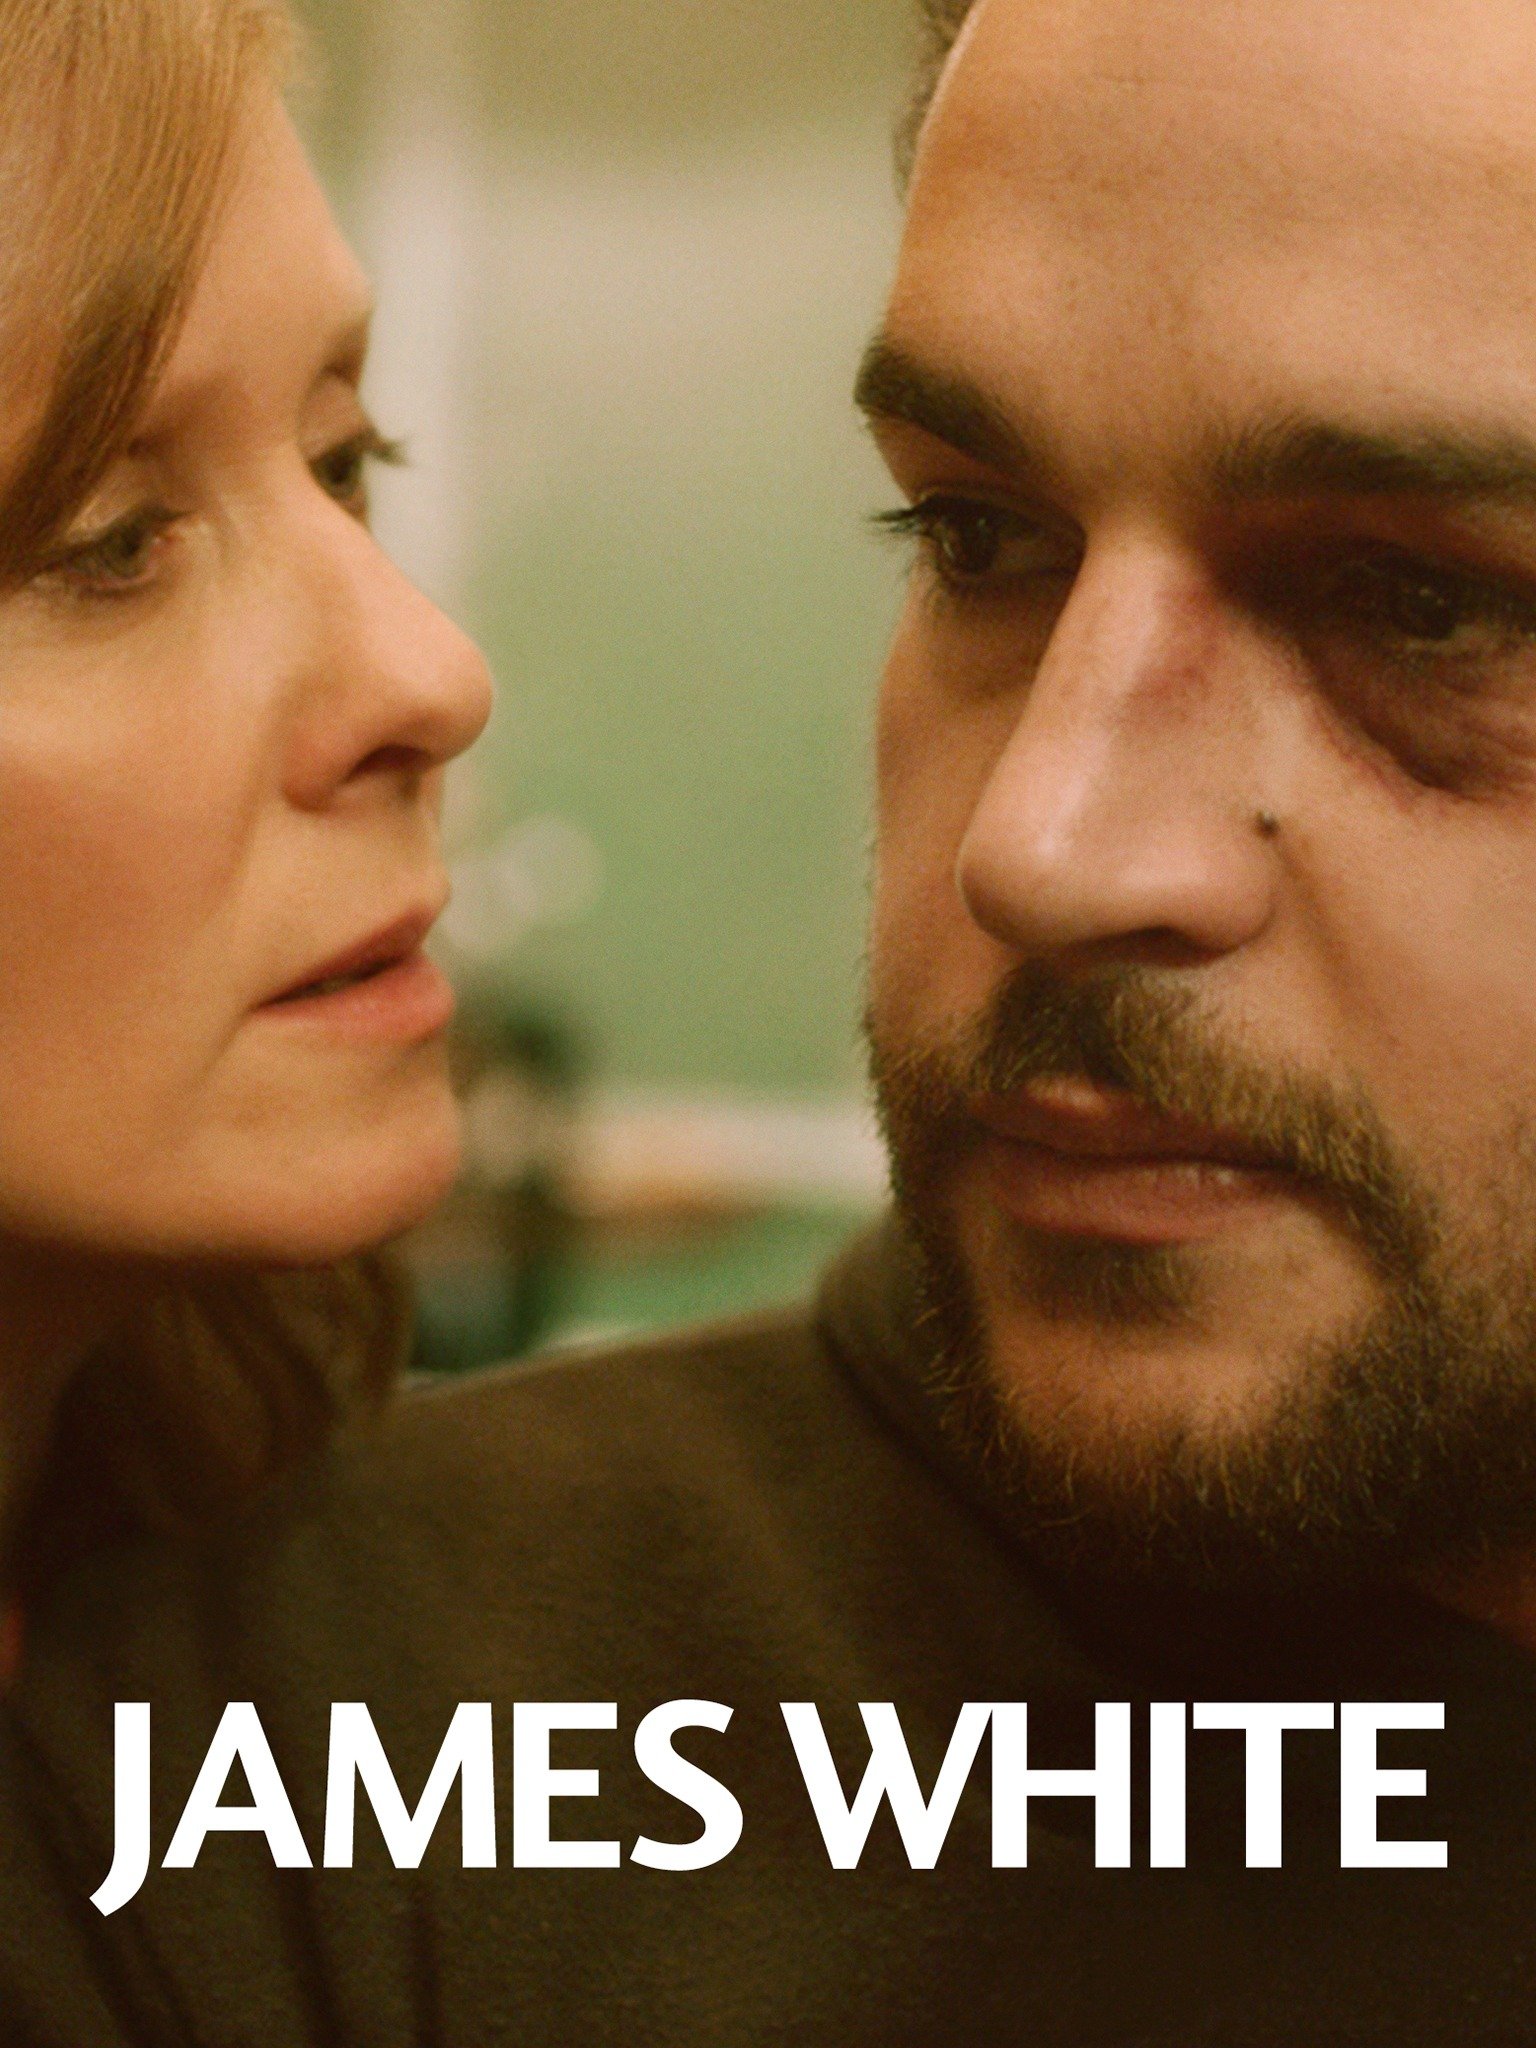 james white movie review